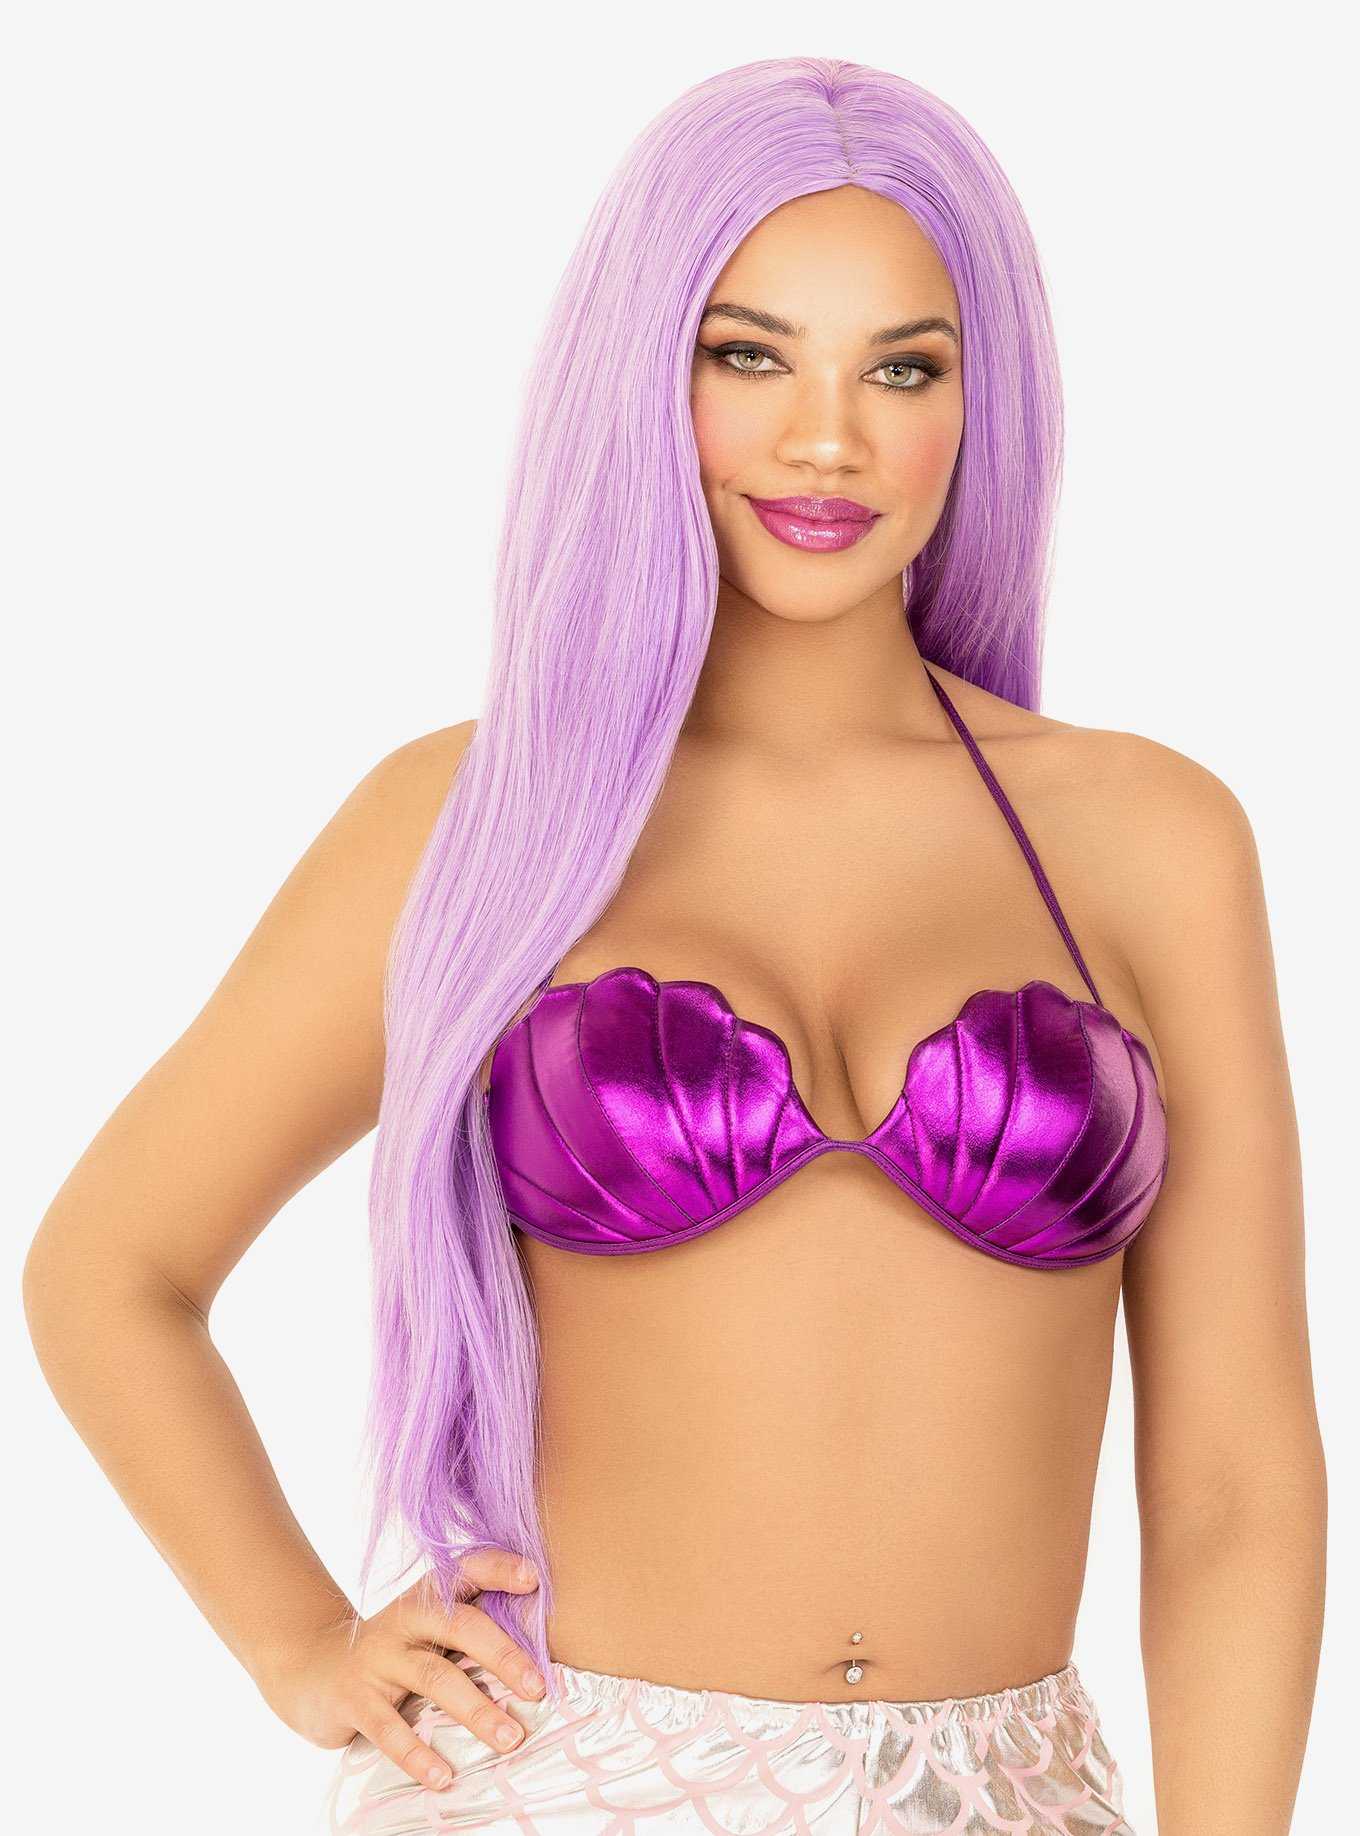 Mermaid Shell Bra Top Costume Purple, , hi-res